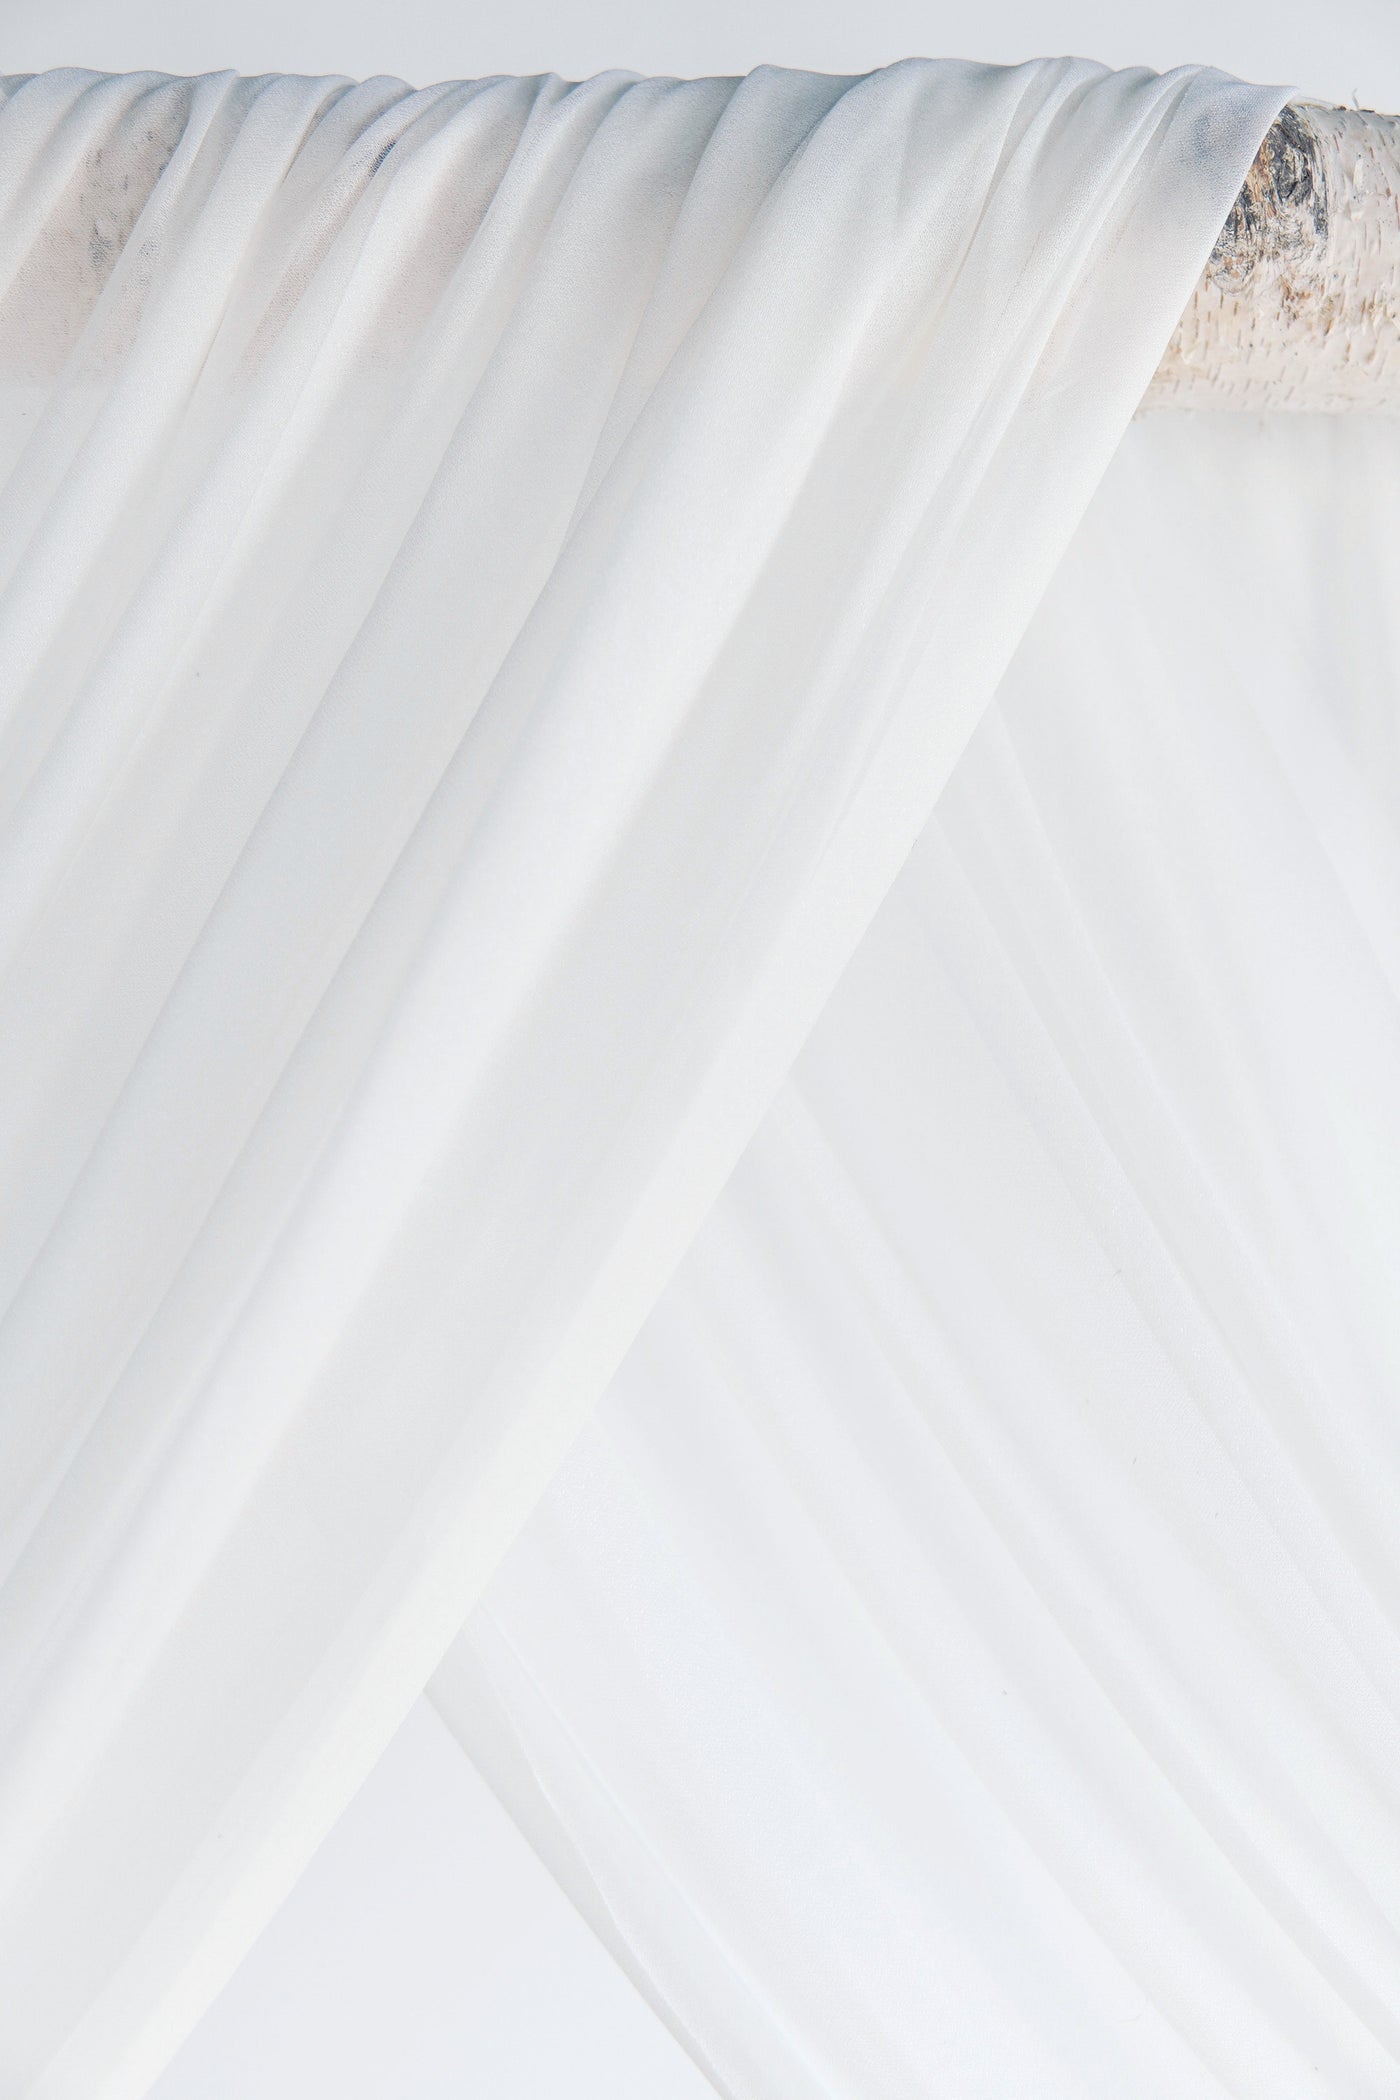 3 Pcs Romantic Wedding Arch Draping 29"w x 19.7ft - Graceful White